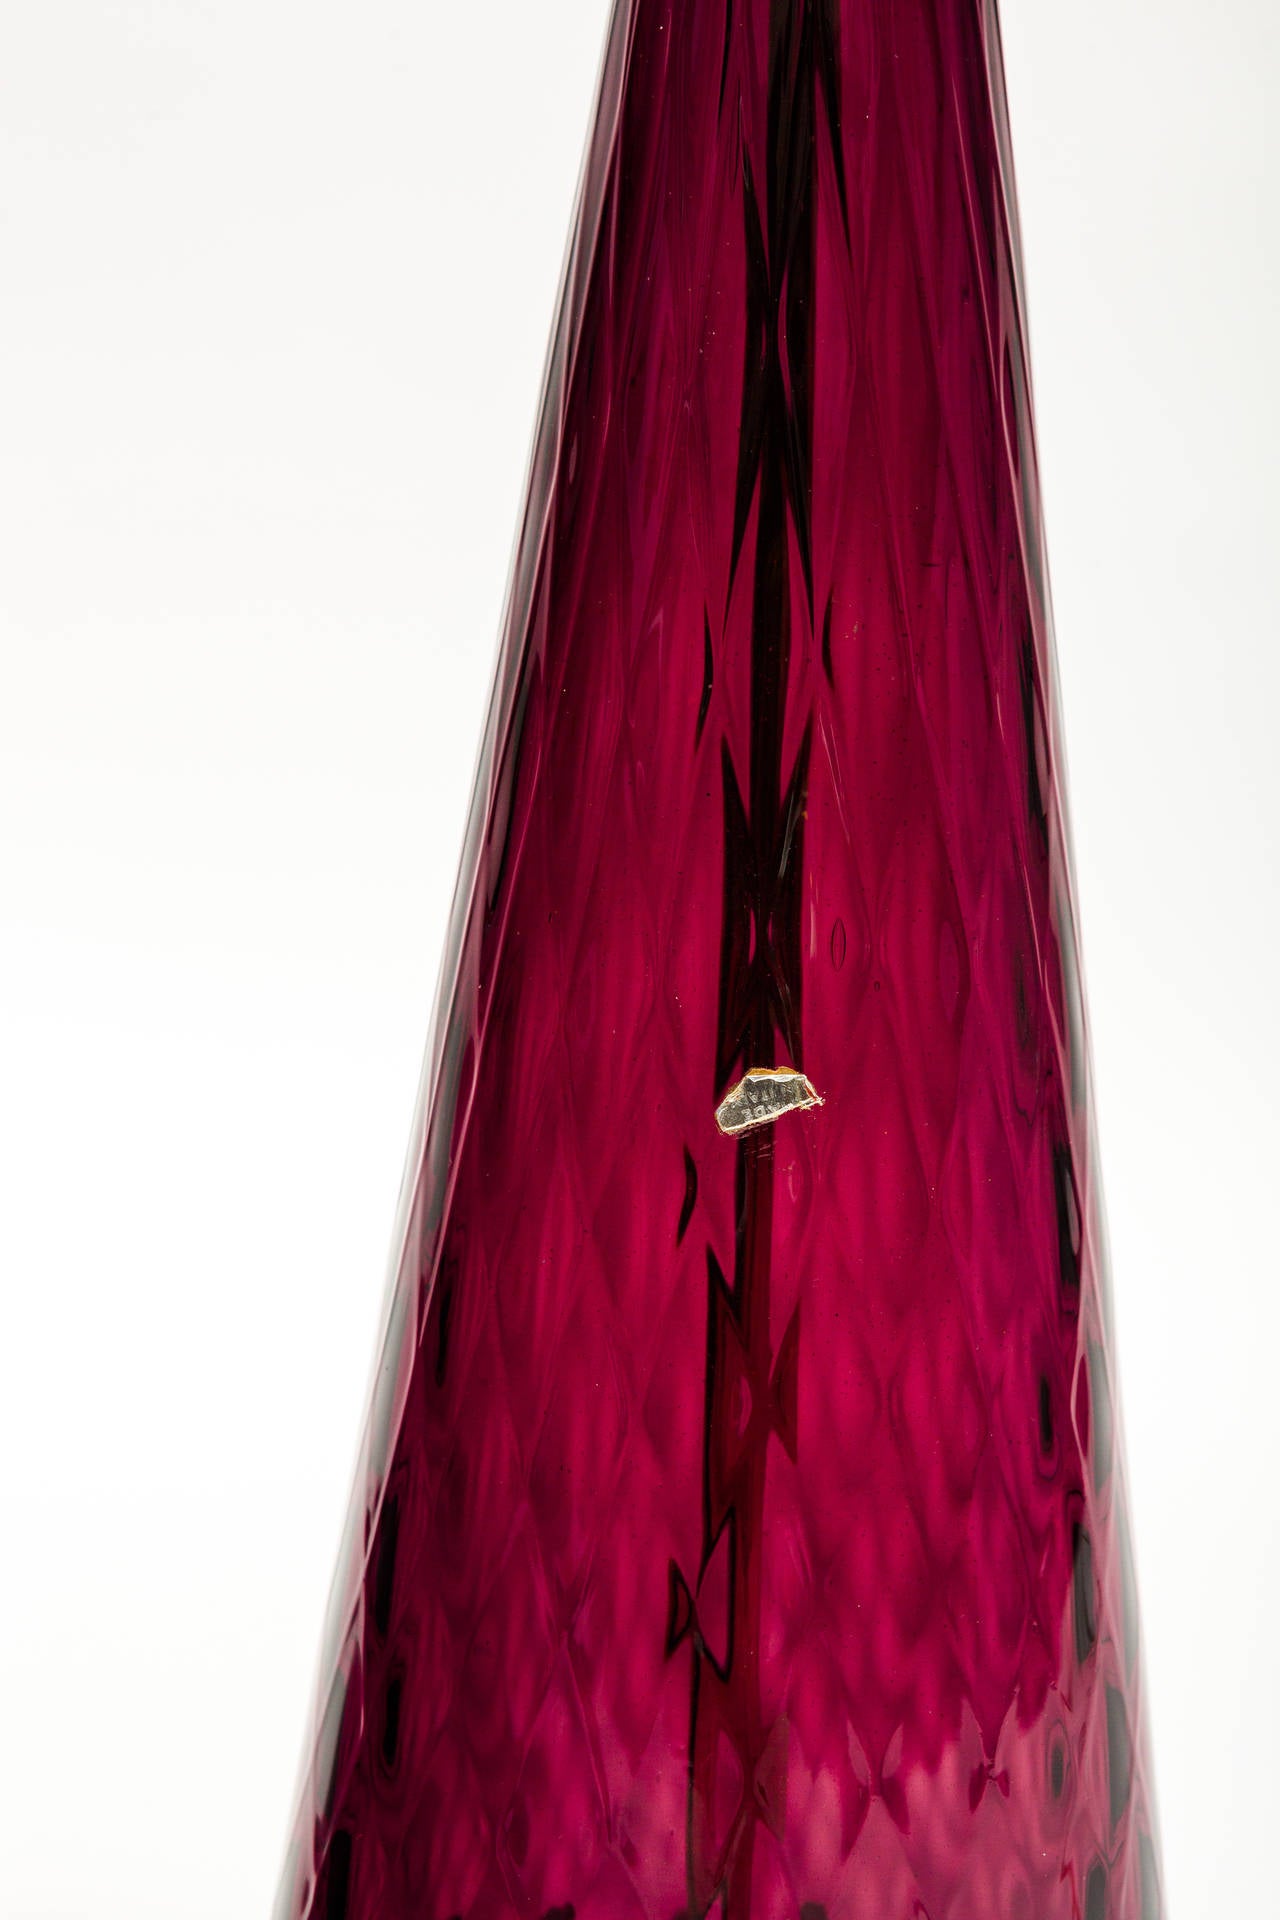 Mid-Century Modern Pair of Purple Murano Glass Table Lamps